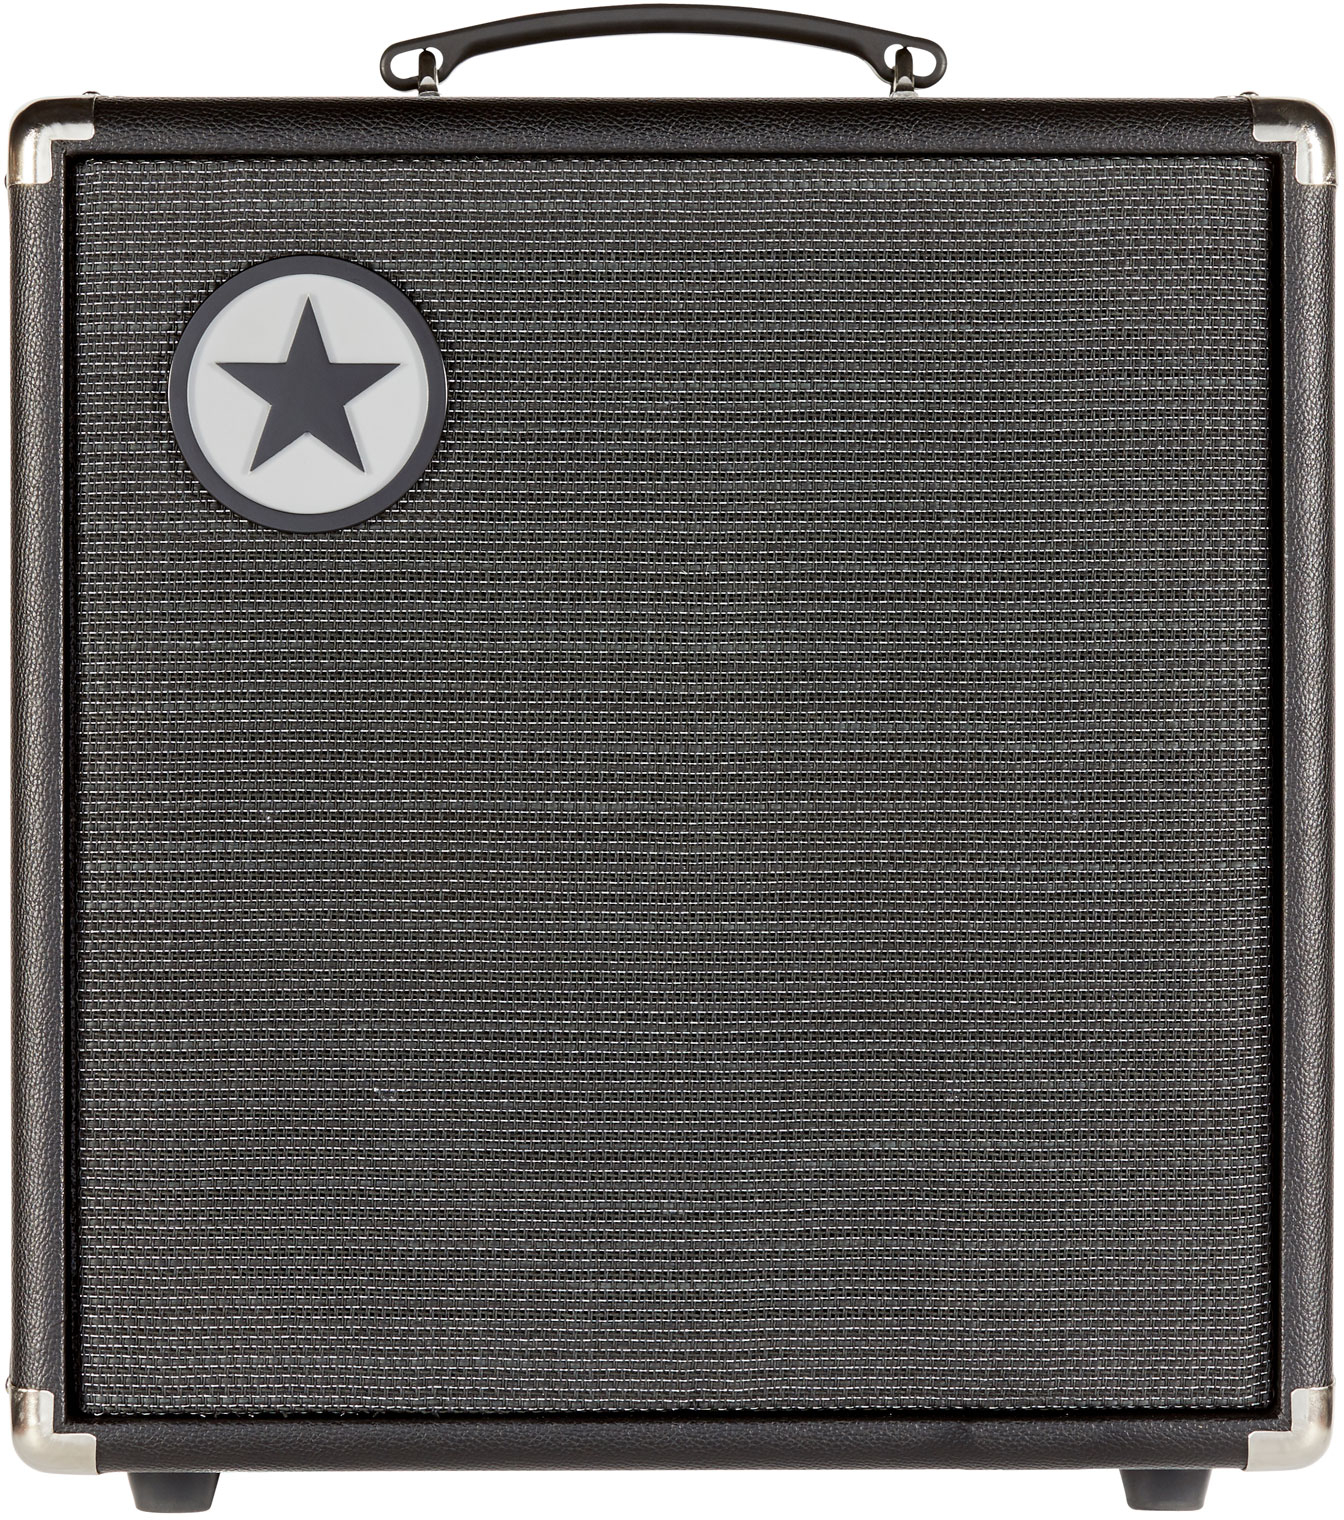 Blackstar Unity 60 - Bass combo amp - Variation 3